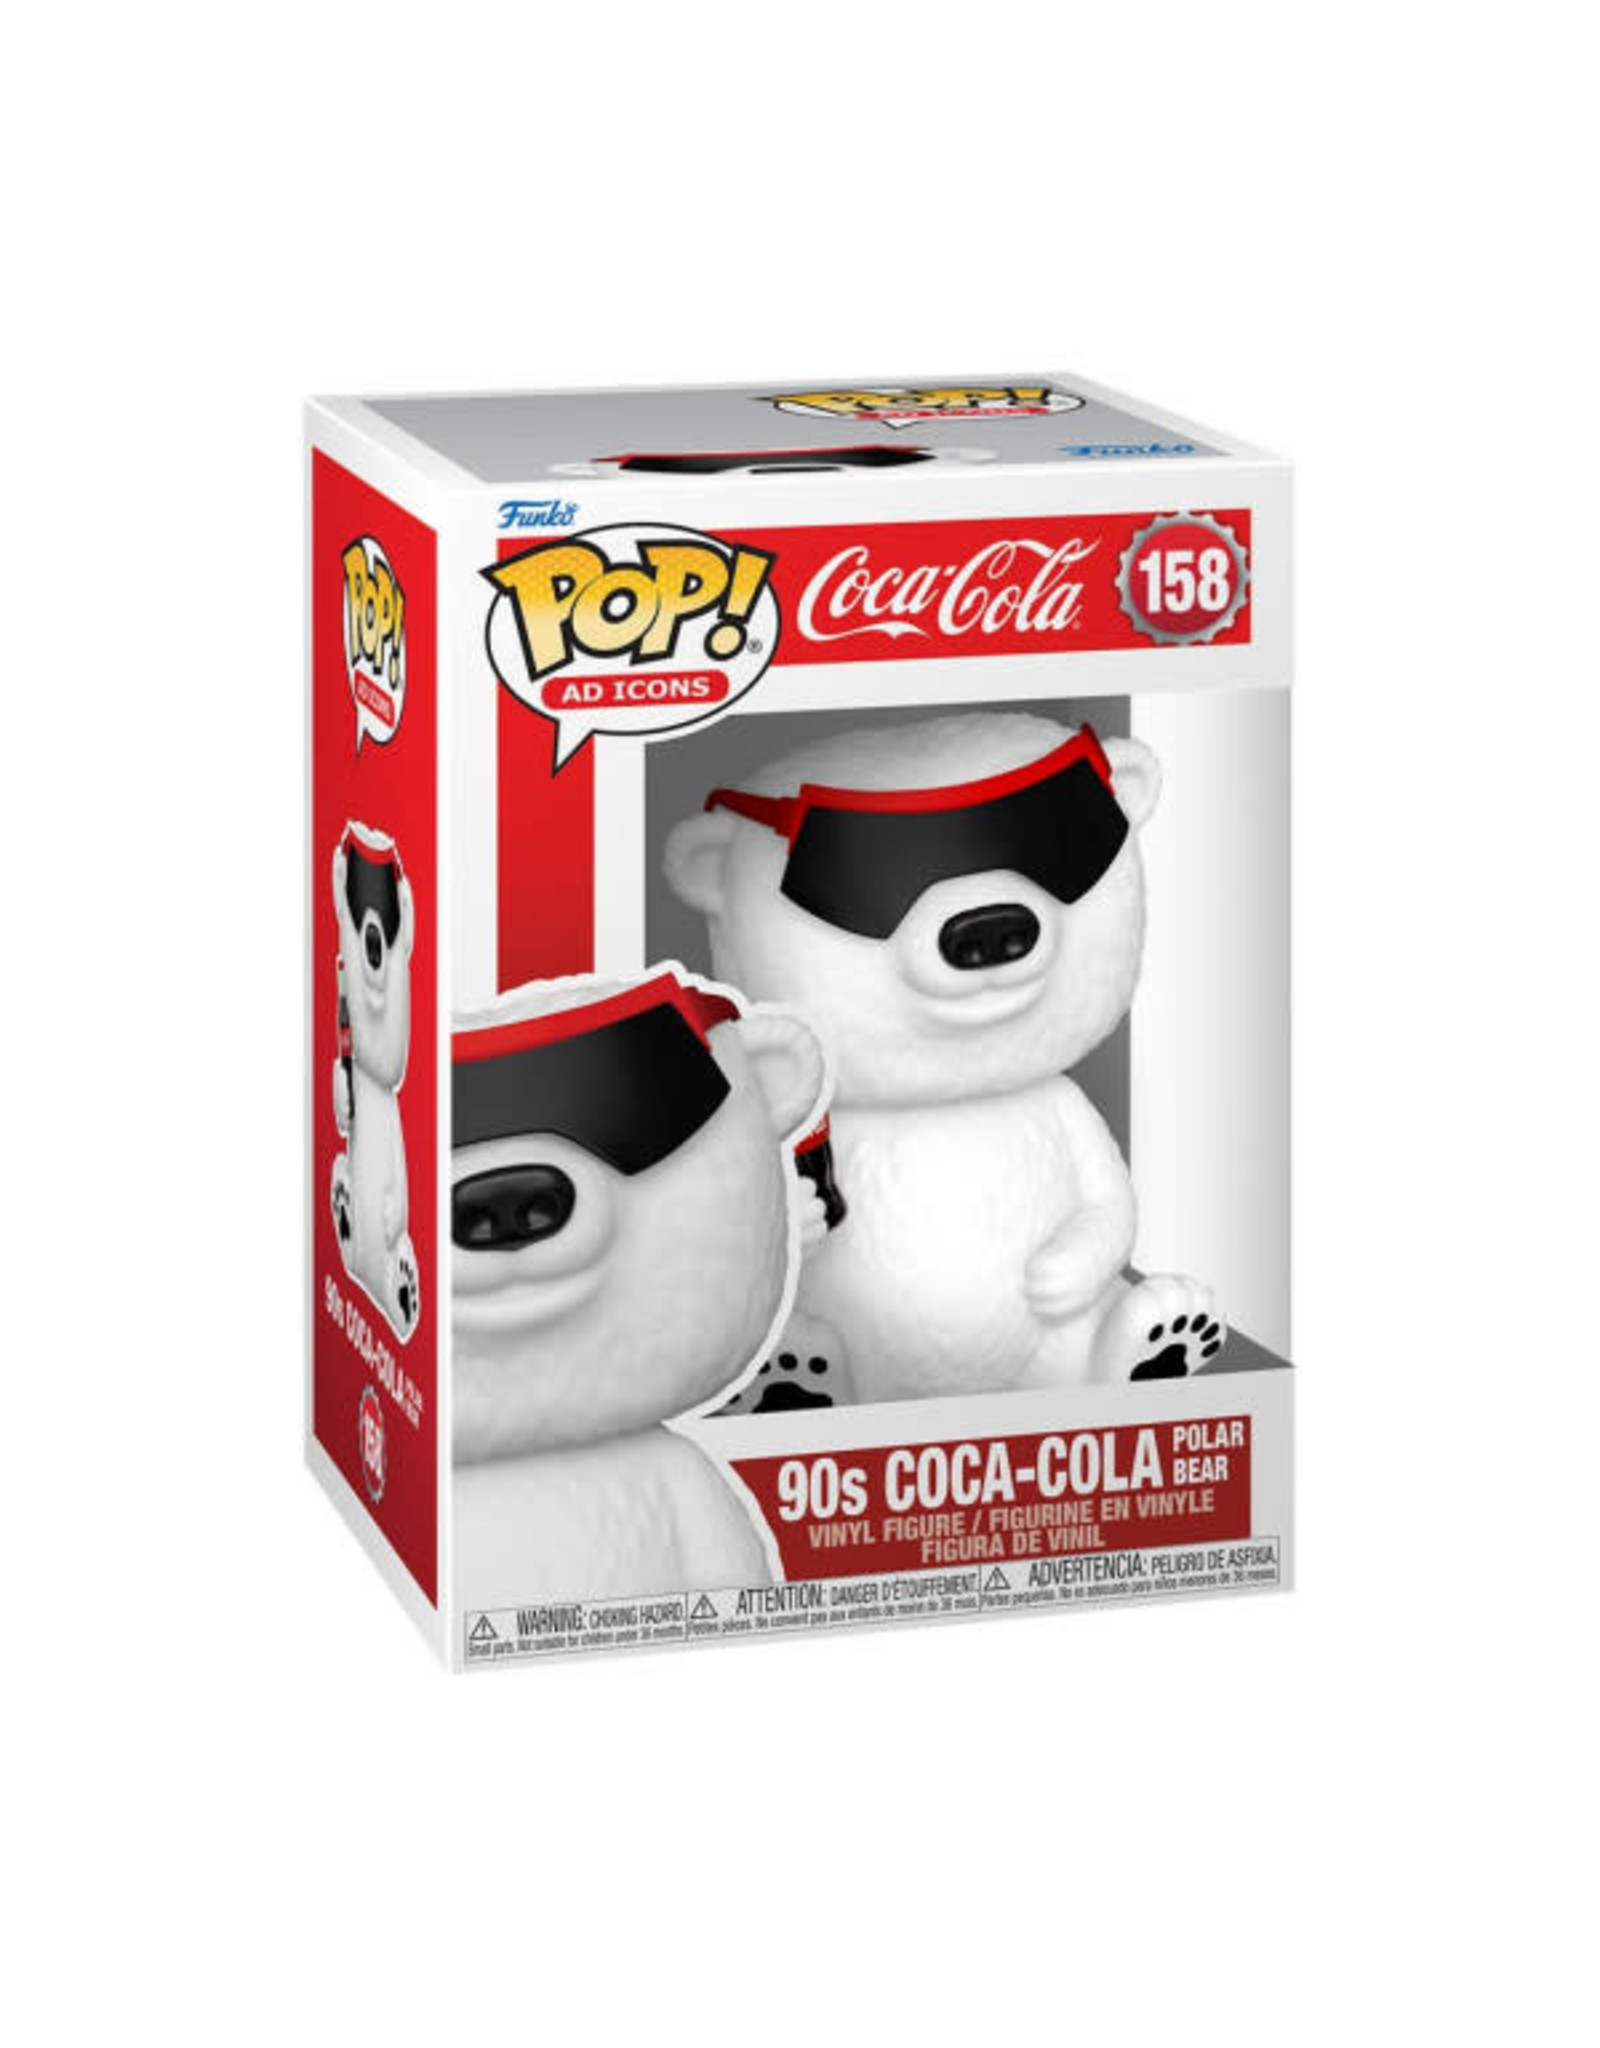 Funko Pop! Funko Pop! Ad Icons nr158 Coca-Cola Polar Bear 90’s